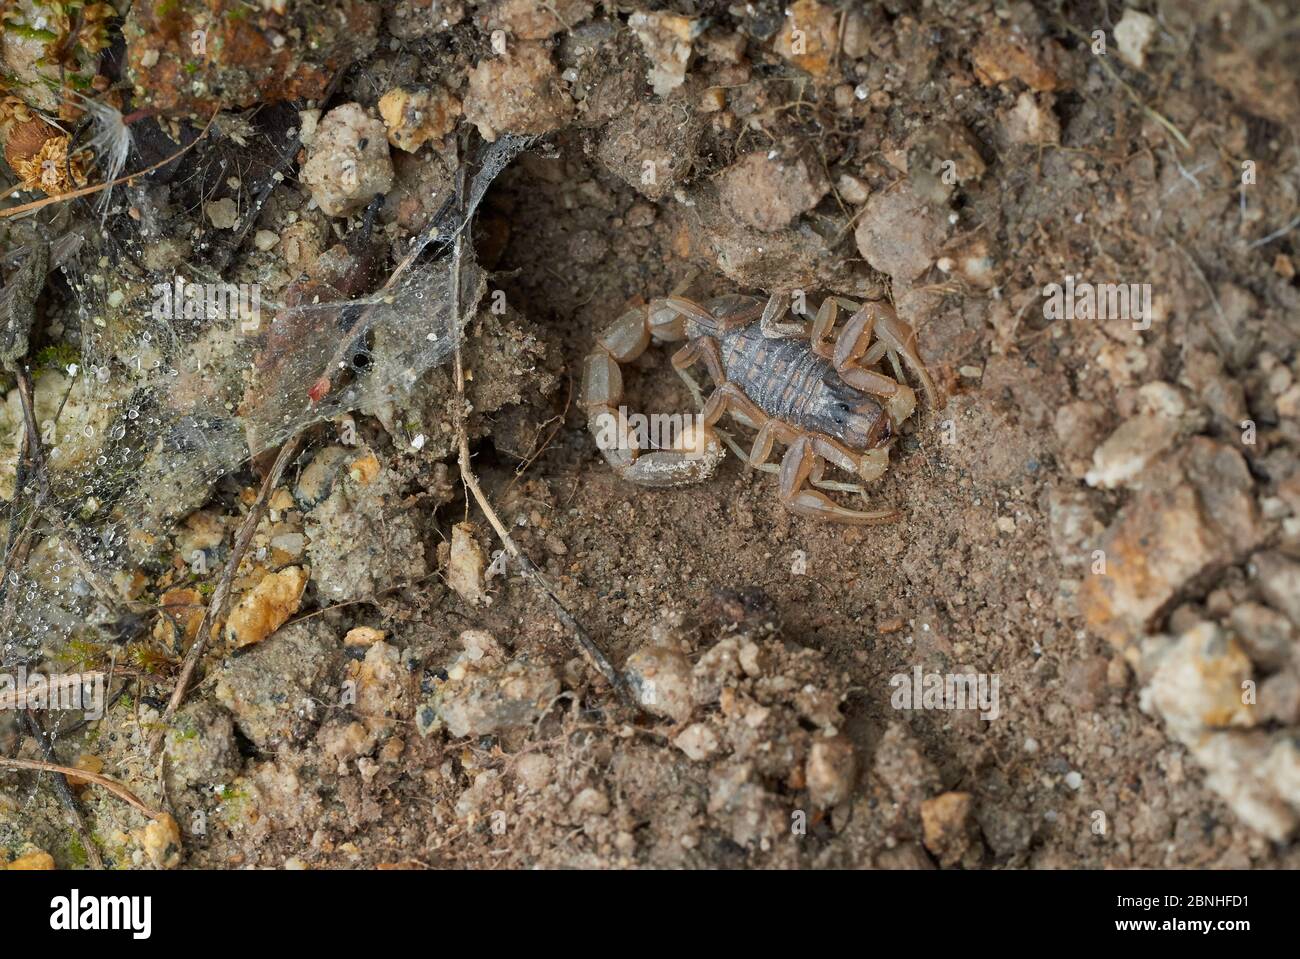 Scorpion (Buthus occitanus) at entrance to burrow under stone, Exremadura, Spain Stock Photo